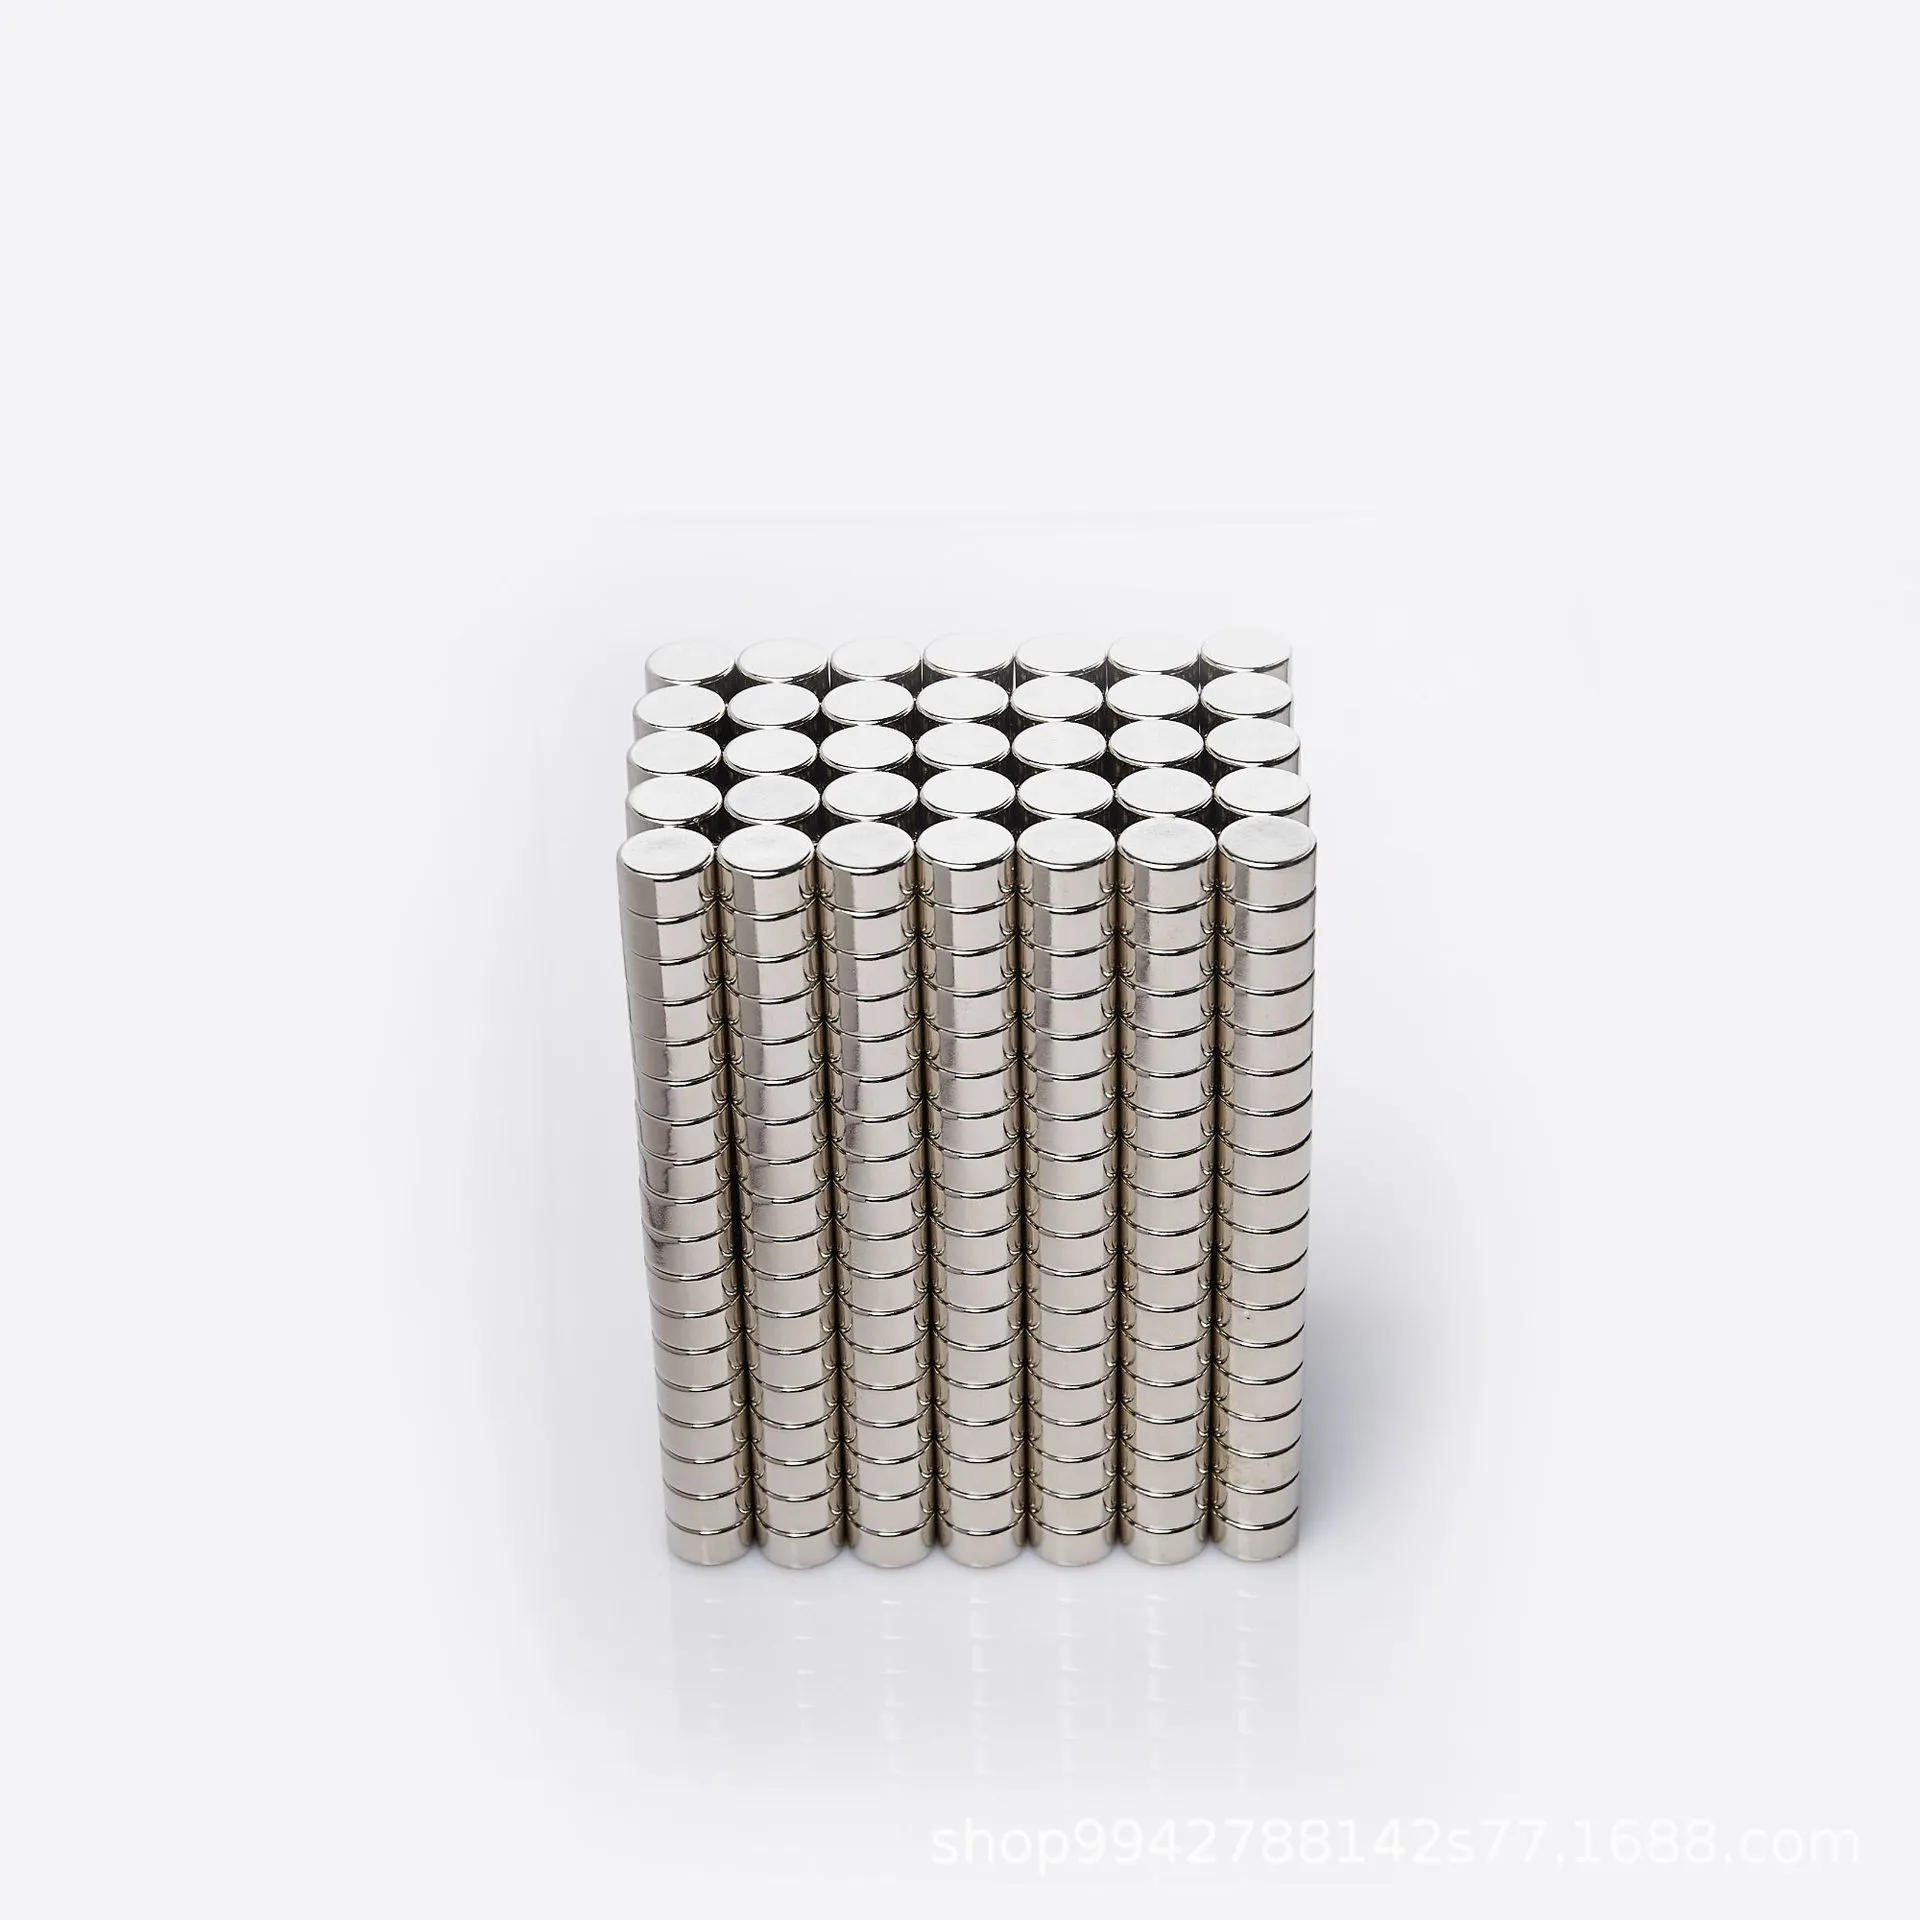 Partihandel - I lager 200PCS Stark Round NDFEB Magneter DIA 5x2mm N35 RARE Earth Neodymium Permanent Craft / DIY Magnet